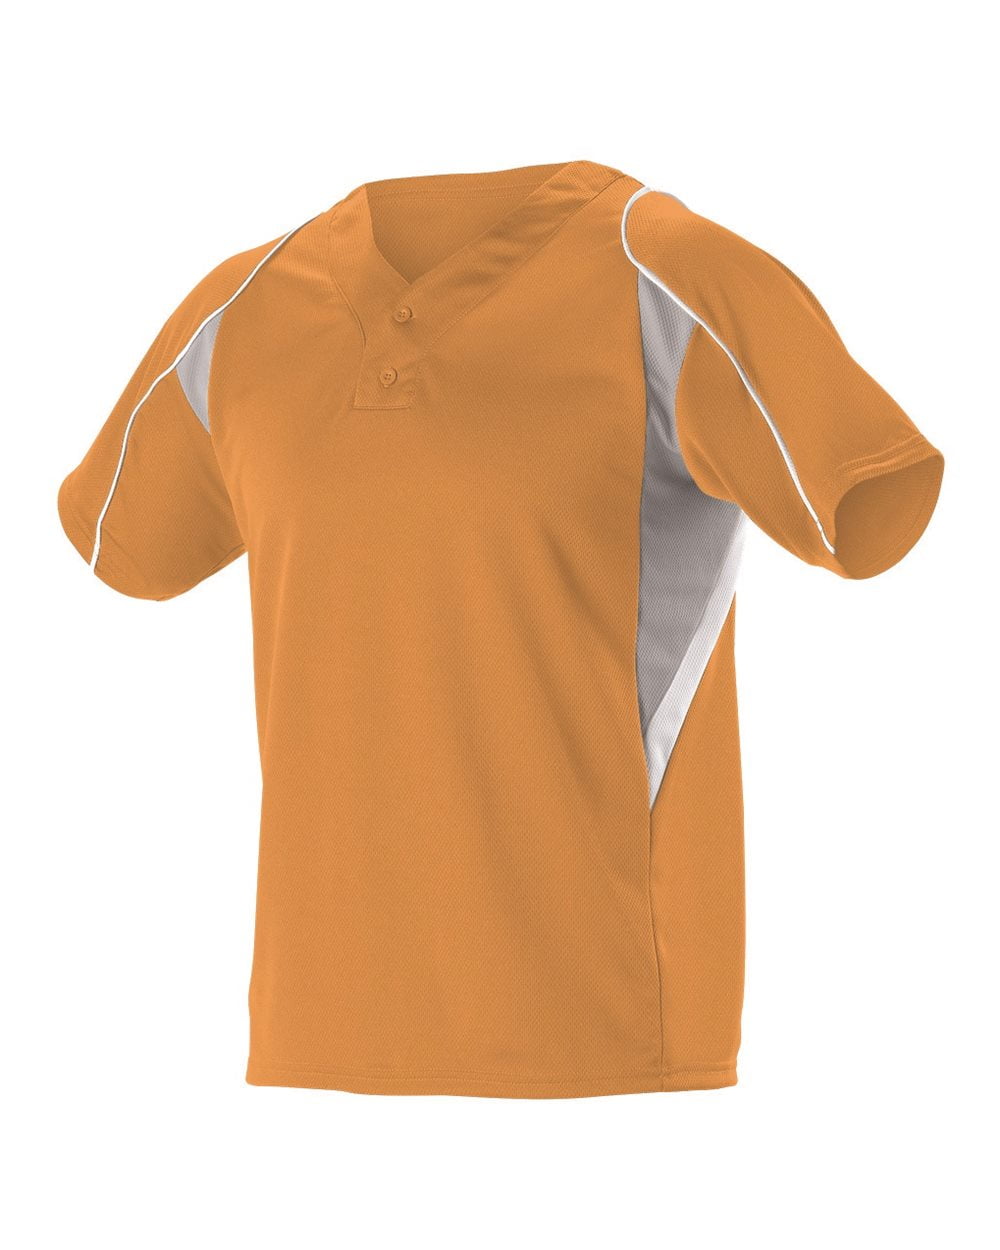 grey and orange baseball jersey